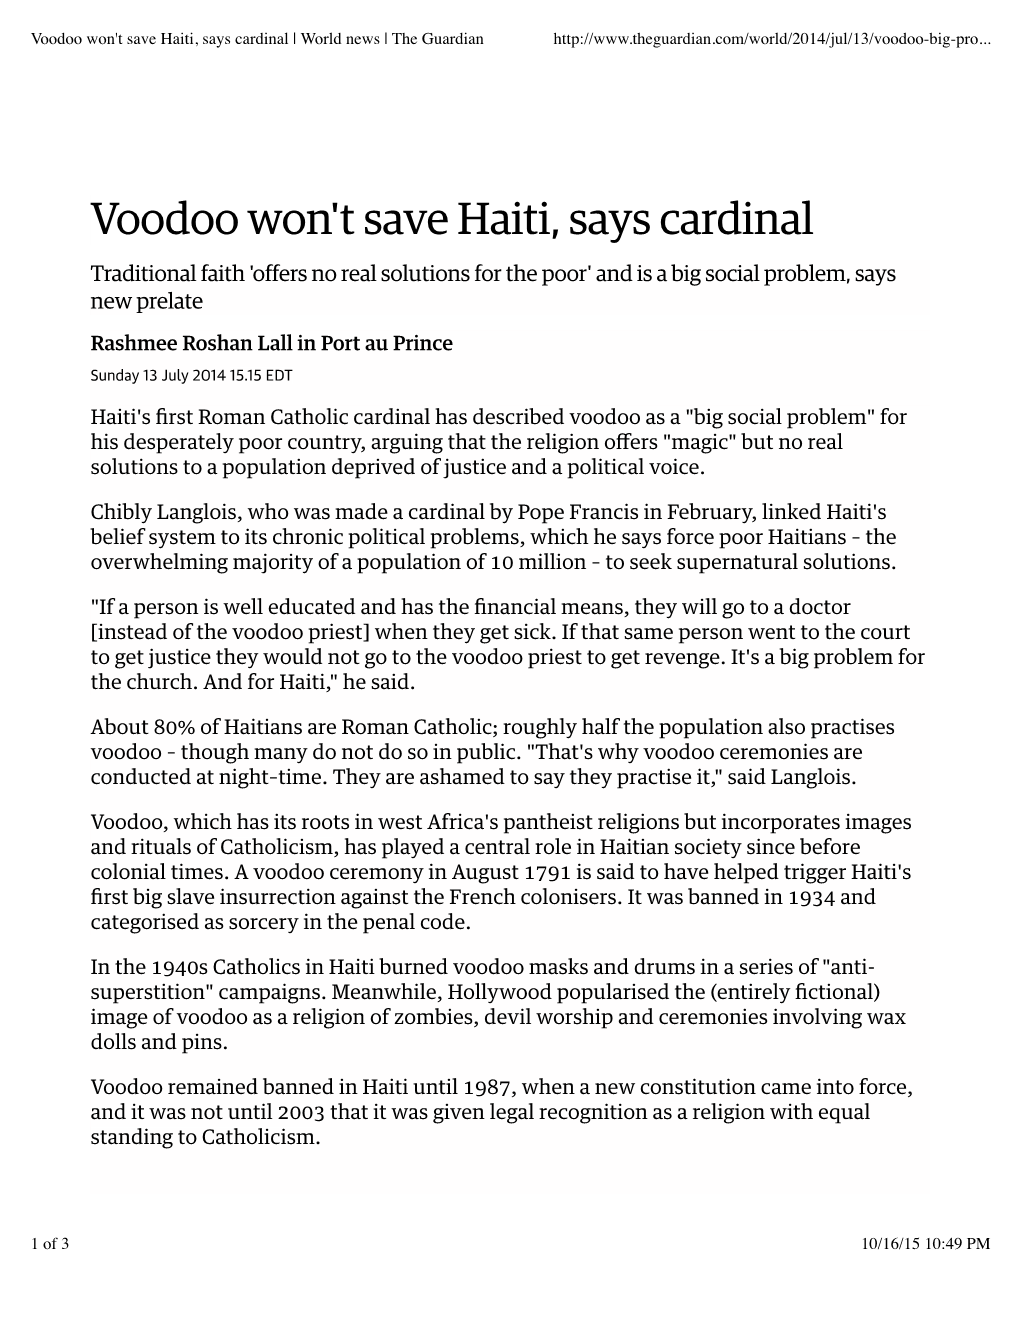 Voodoo Won't Save Haiti, Says Cardinal | World News | the Guardian